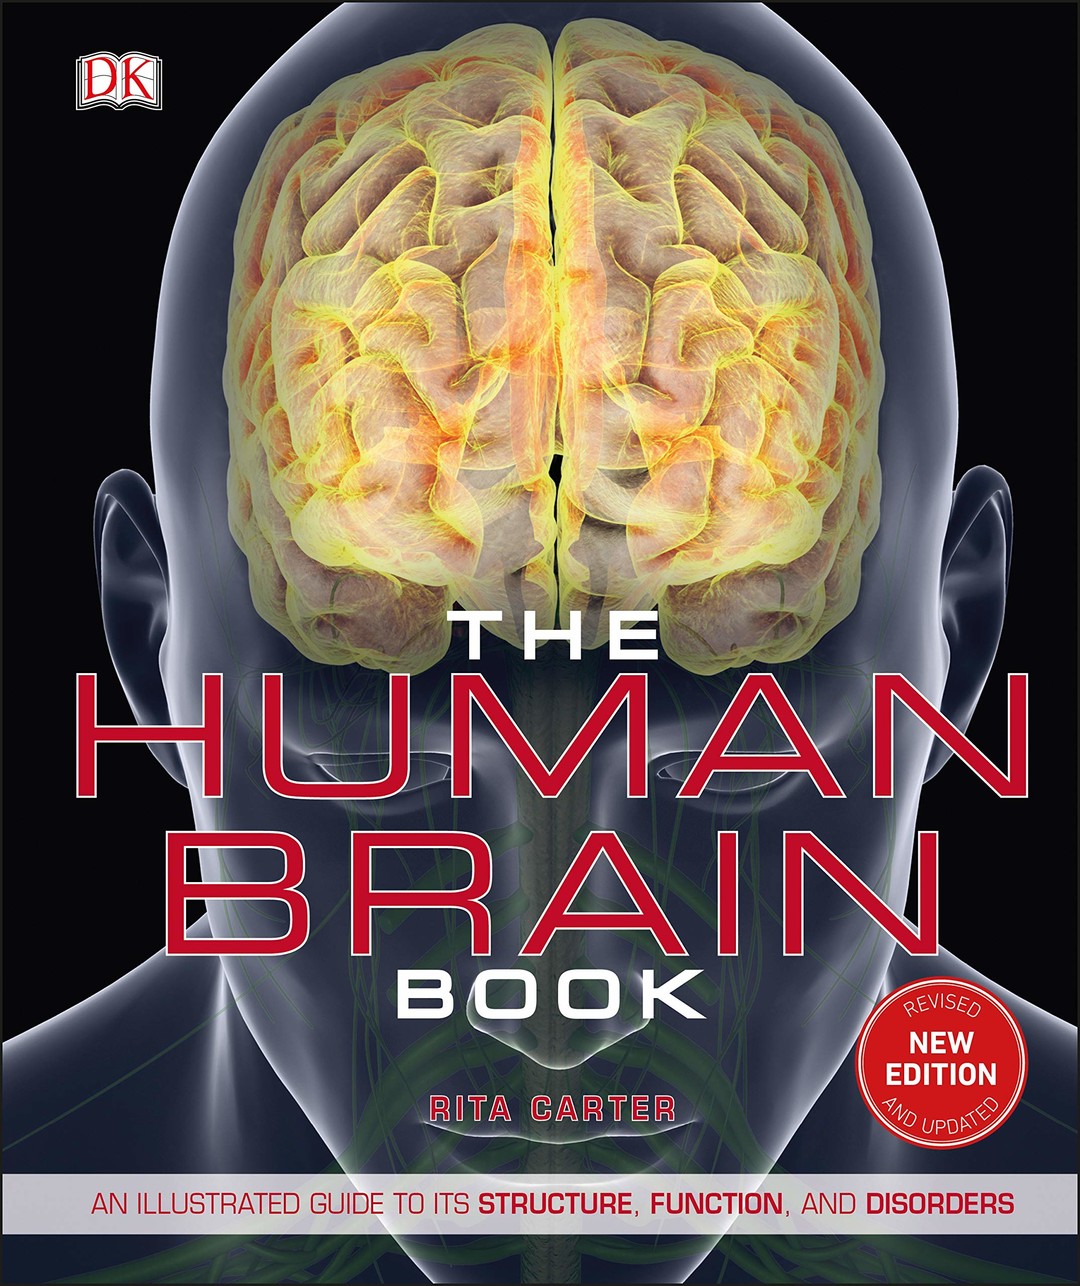 DK人类大脑2019最新百科全书